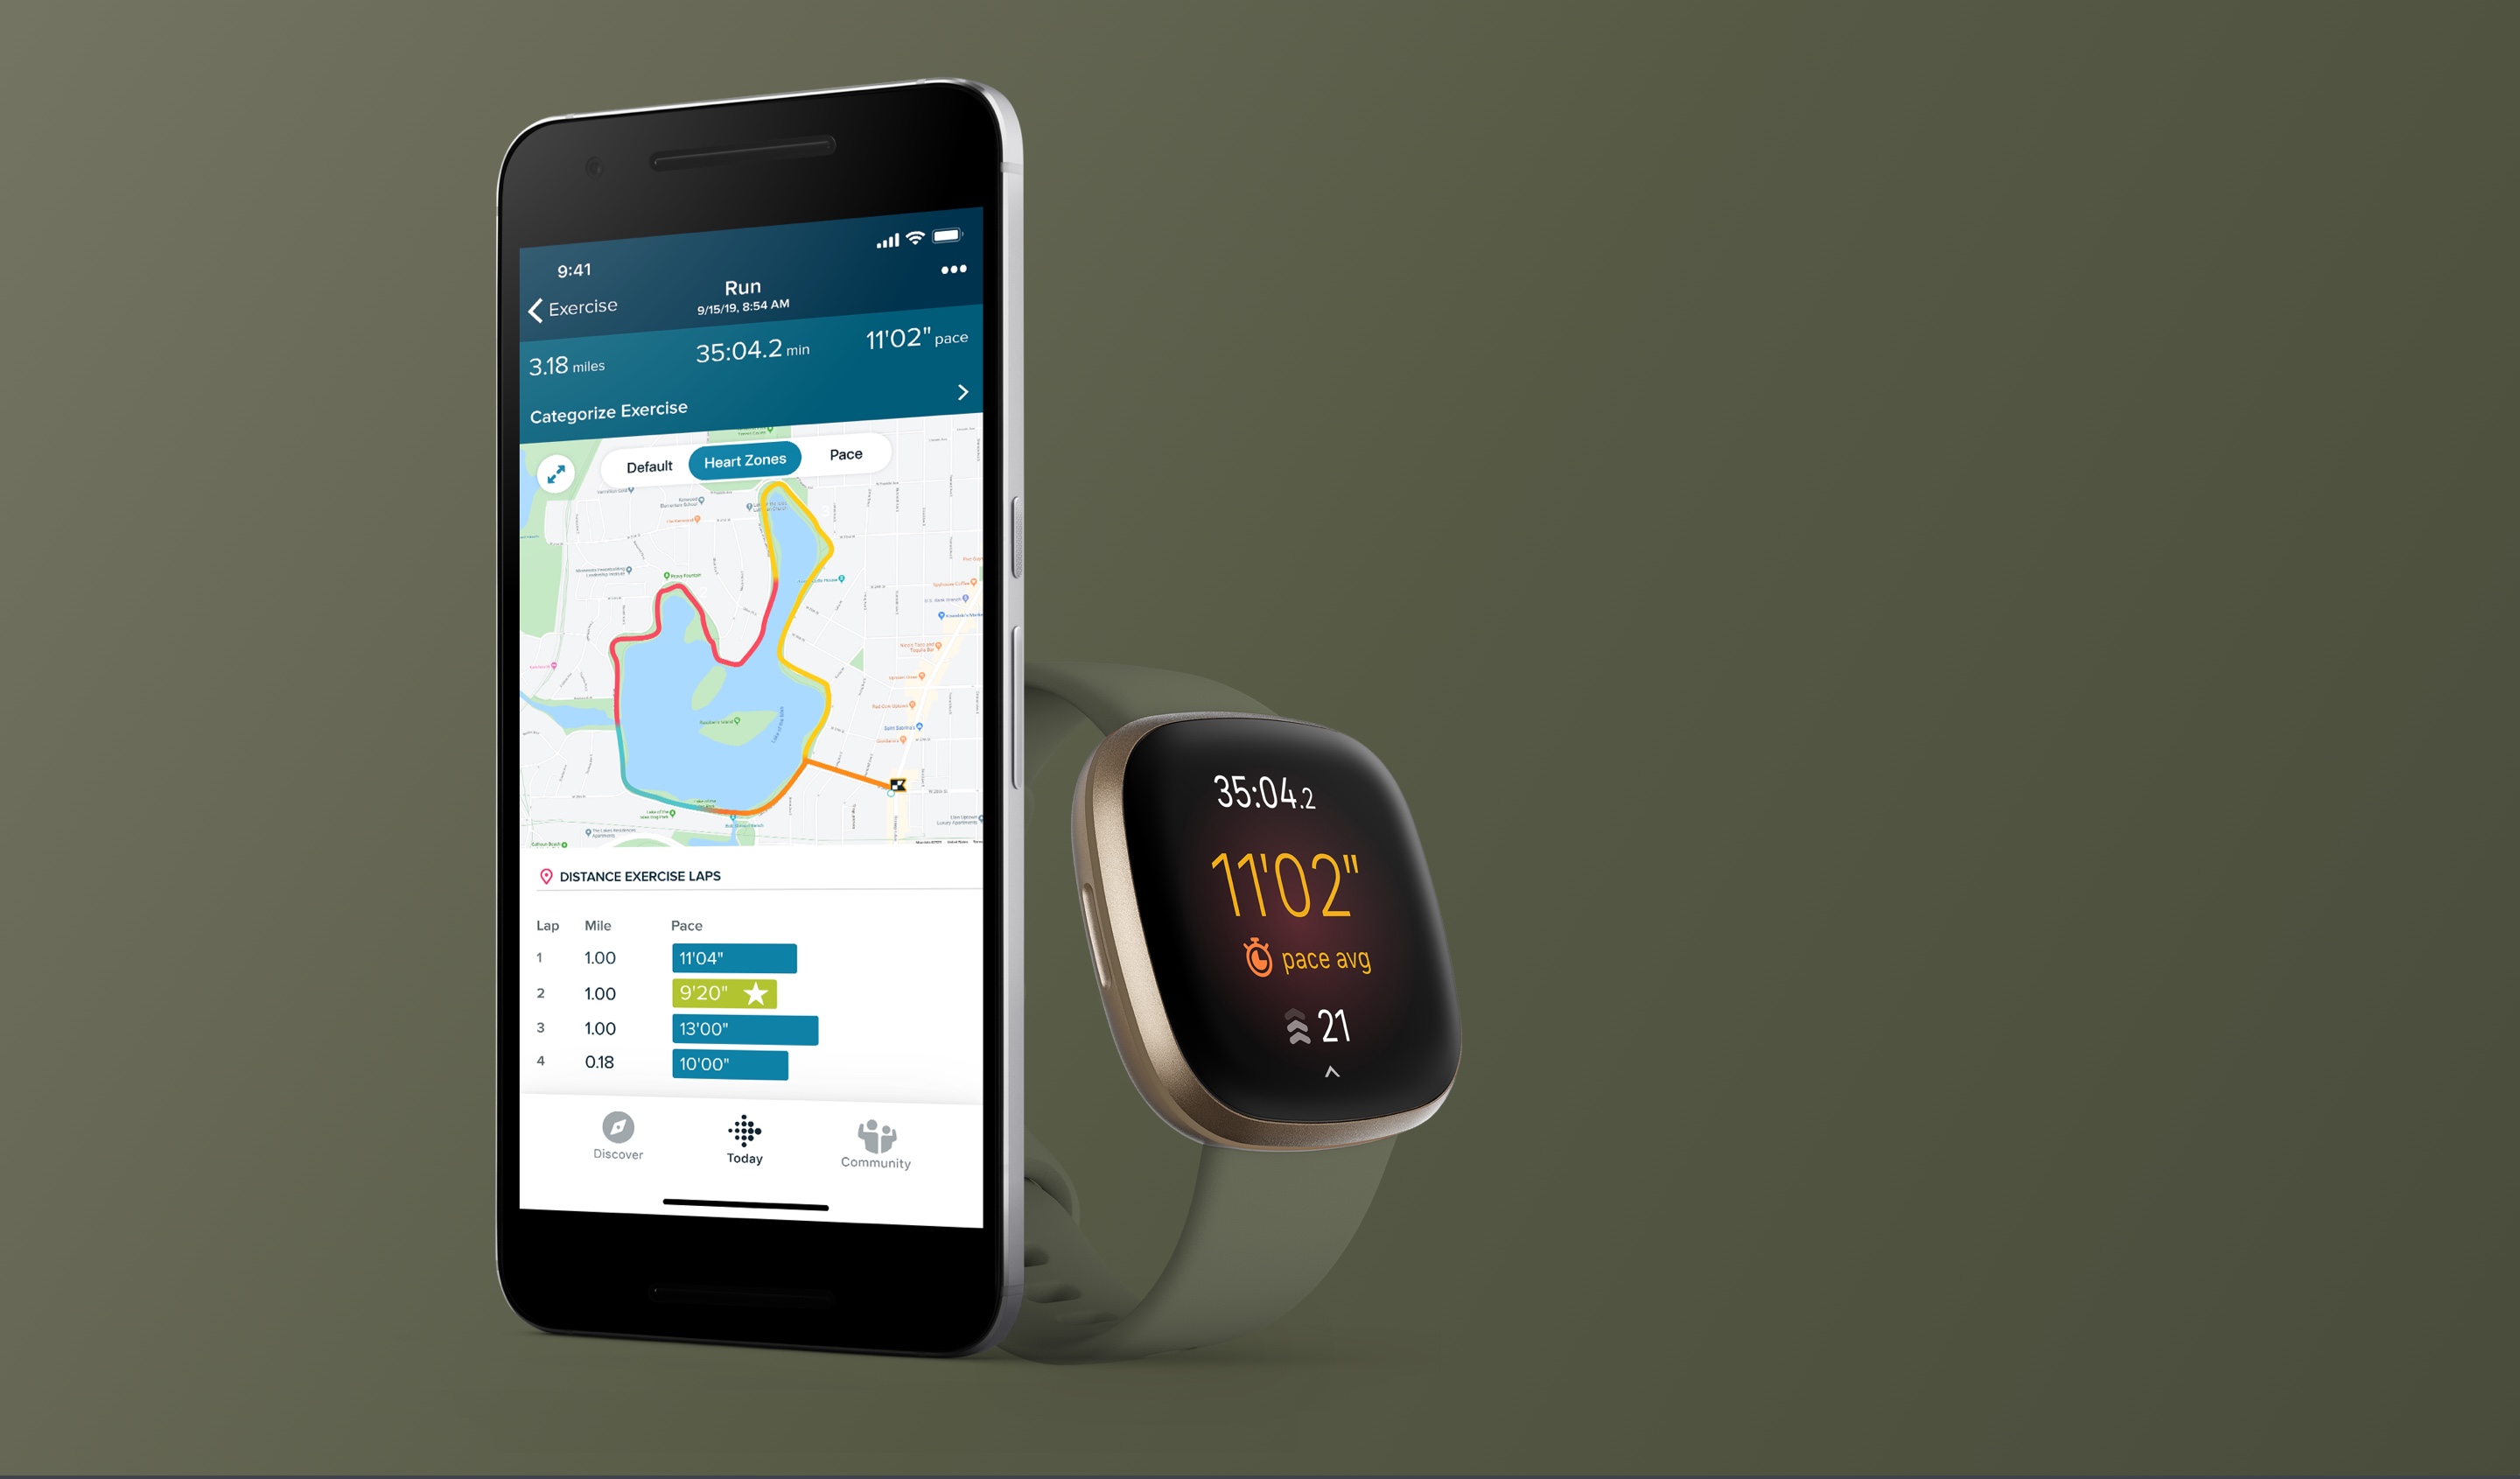 Watch + GPS  Fitbit Versa 3